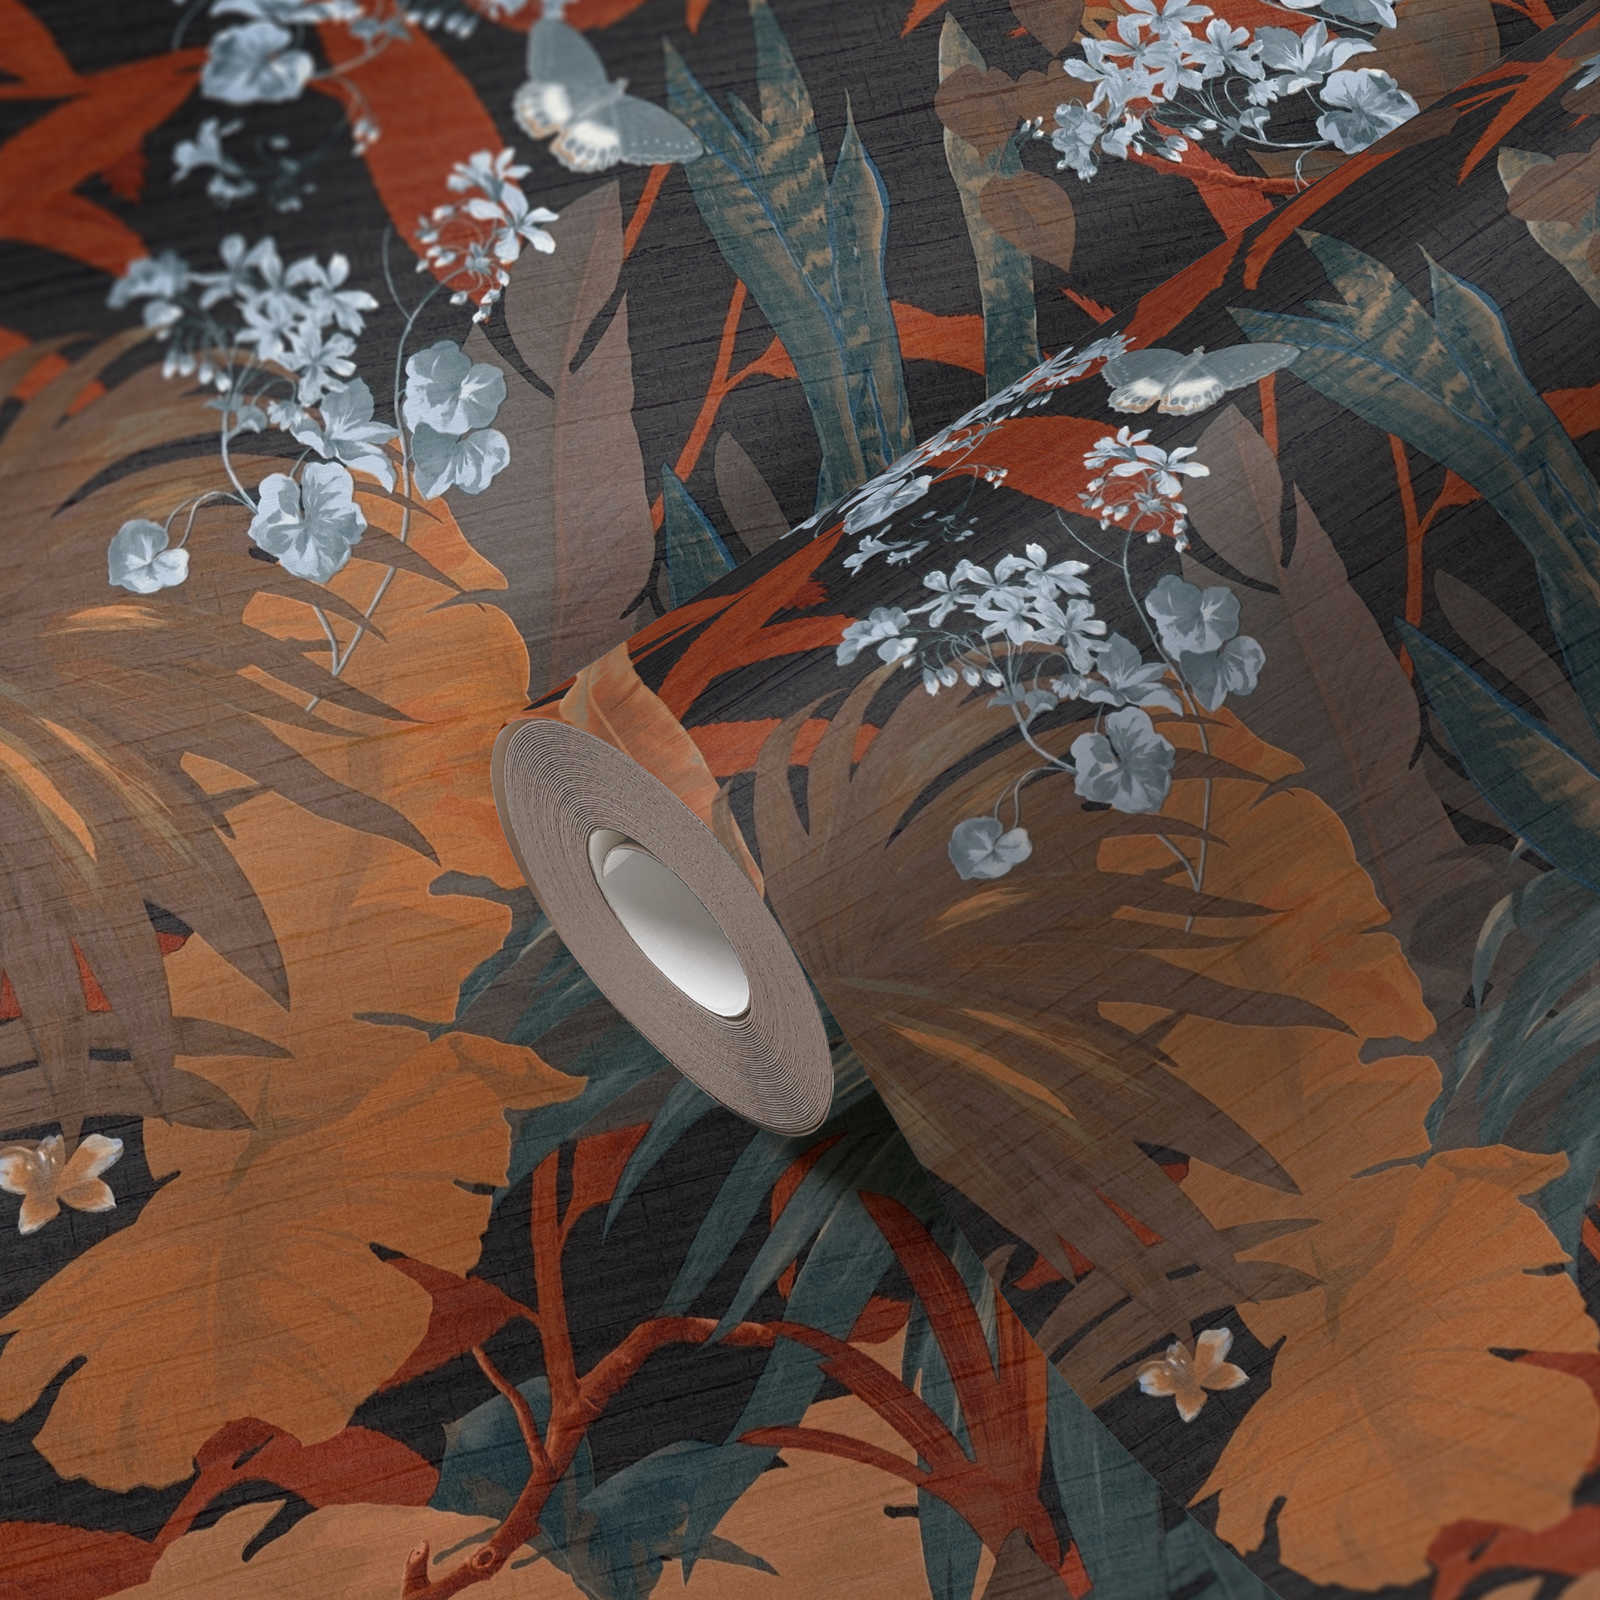             Papel pintado selva con motivo de hojas - naranja, azul
        